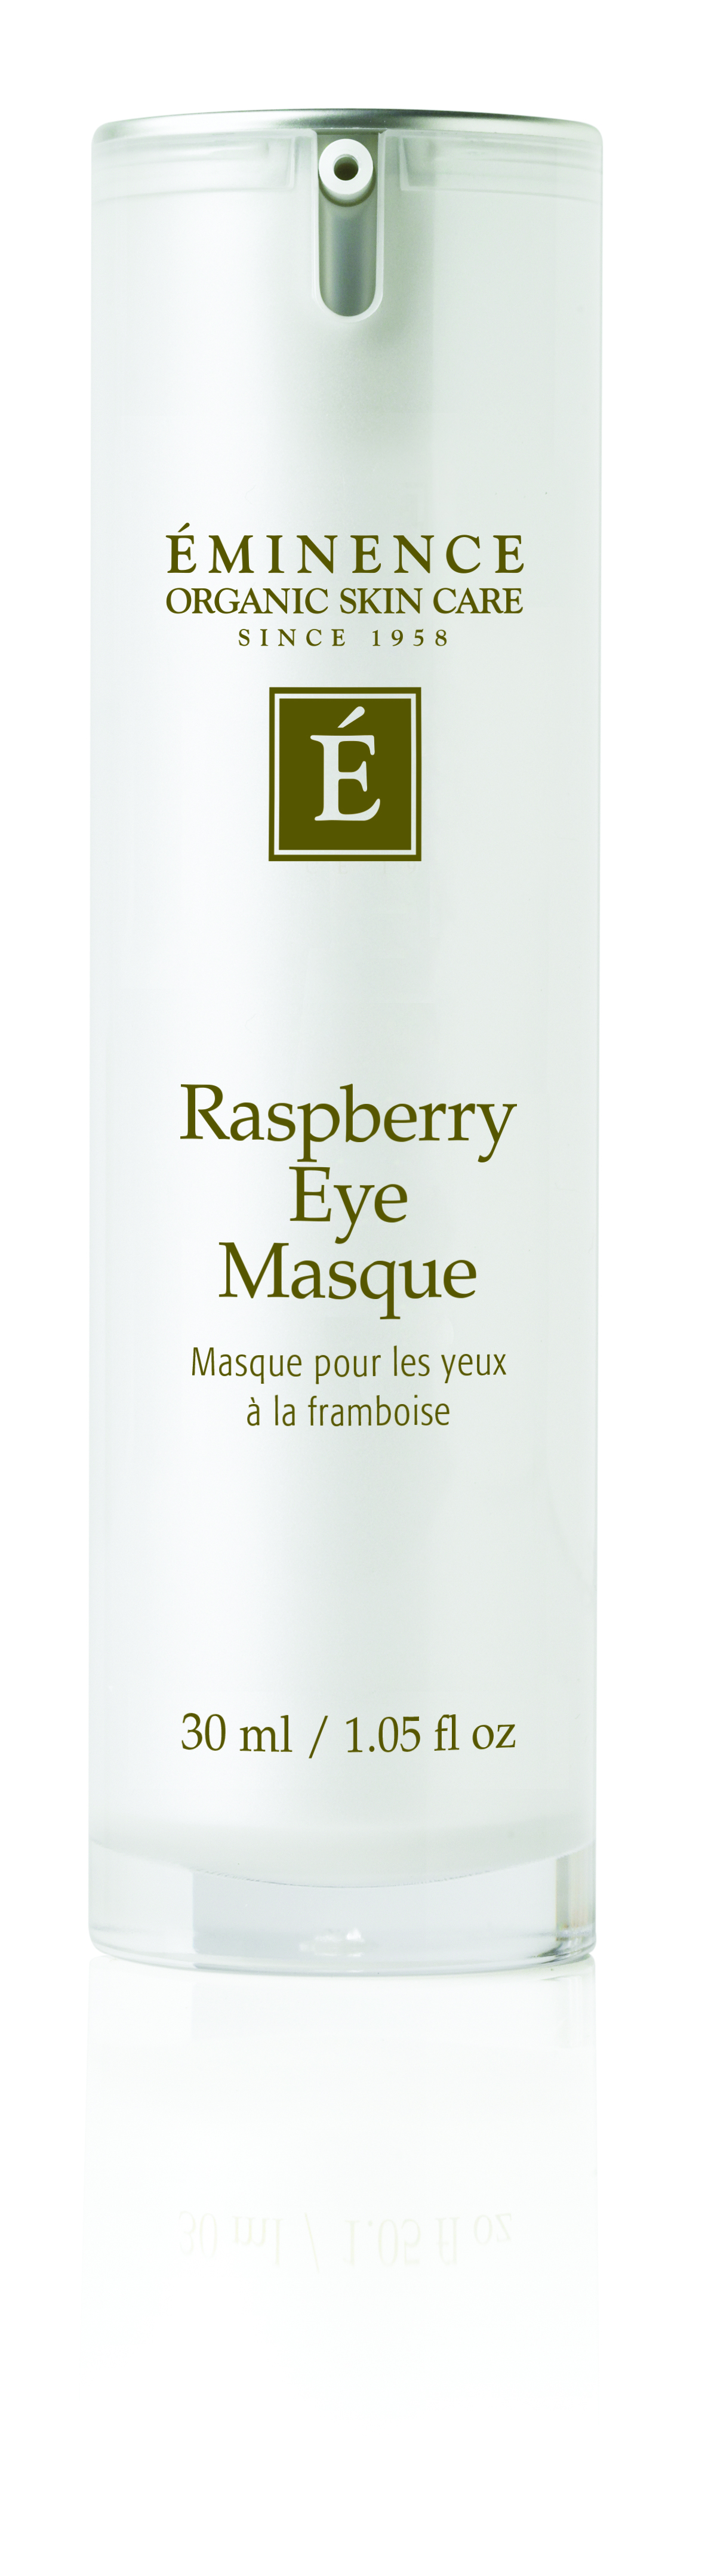 Raspberry_Eye_Masque